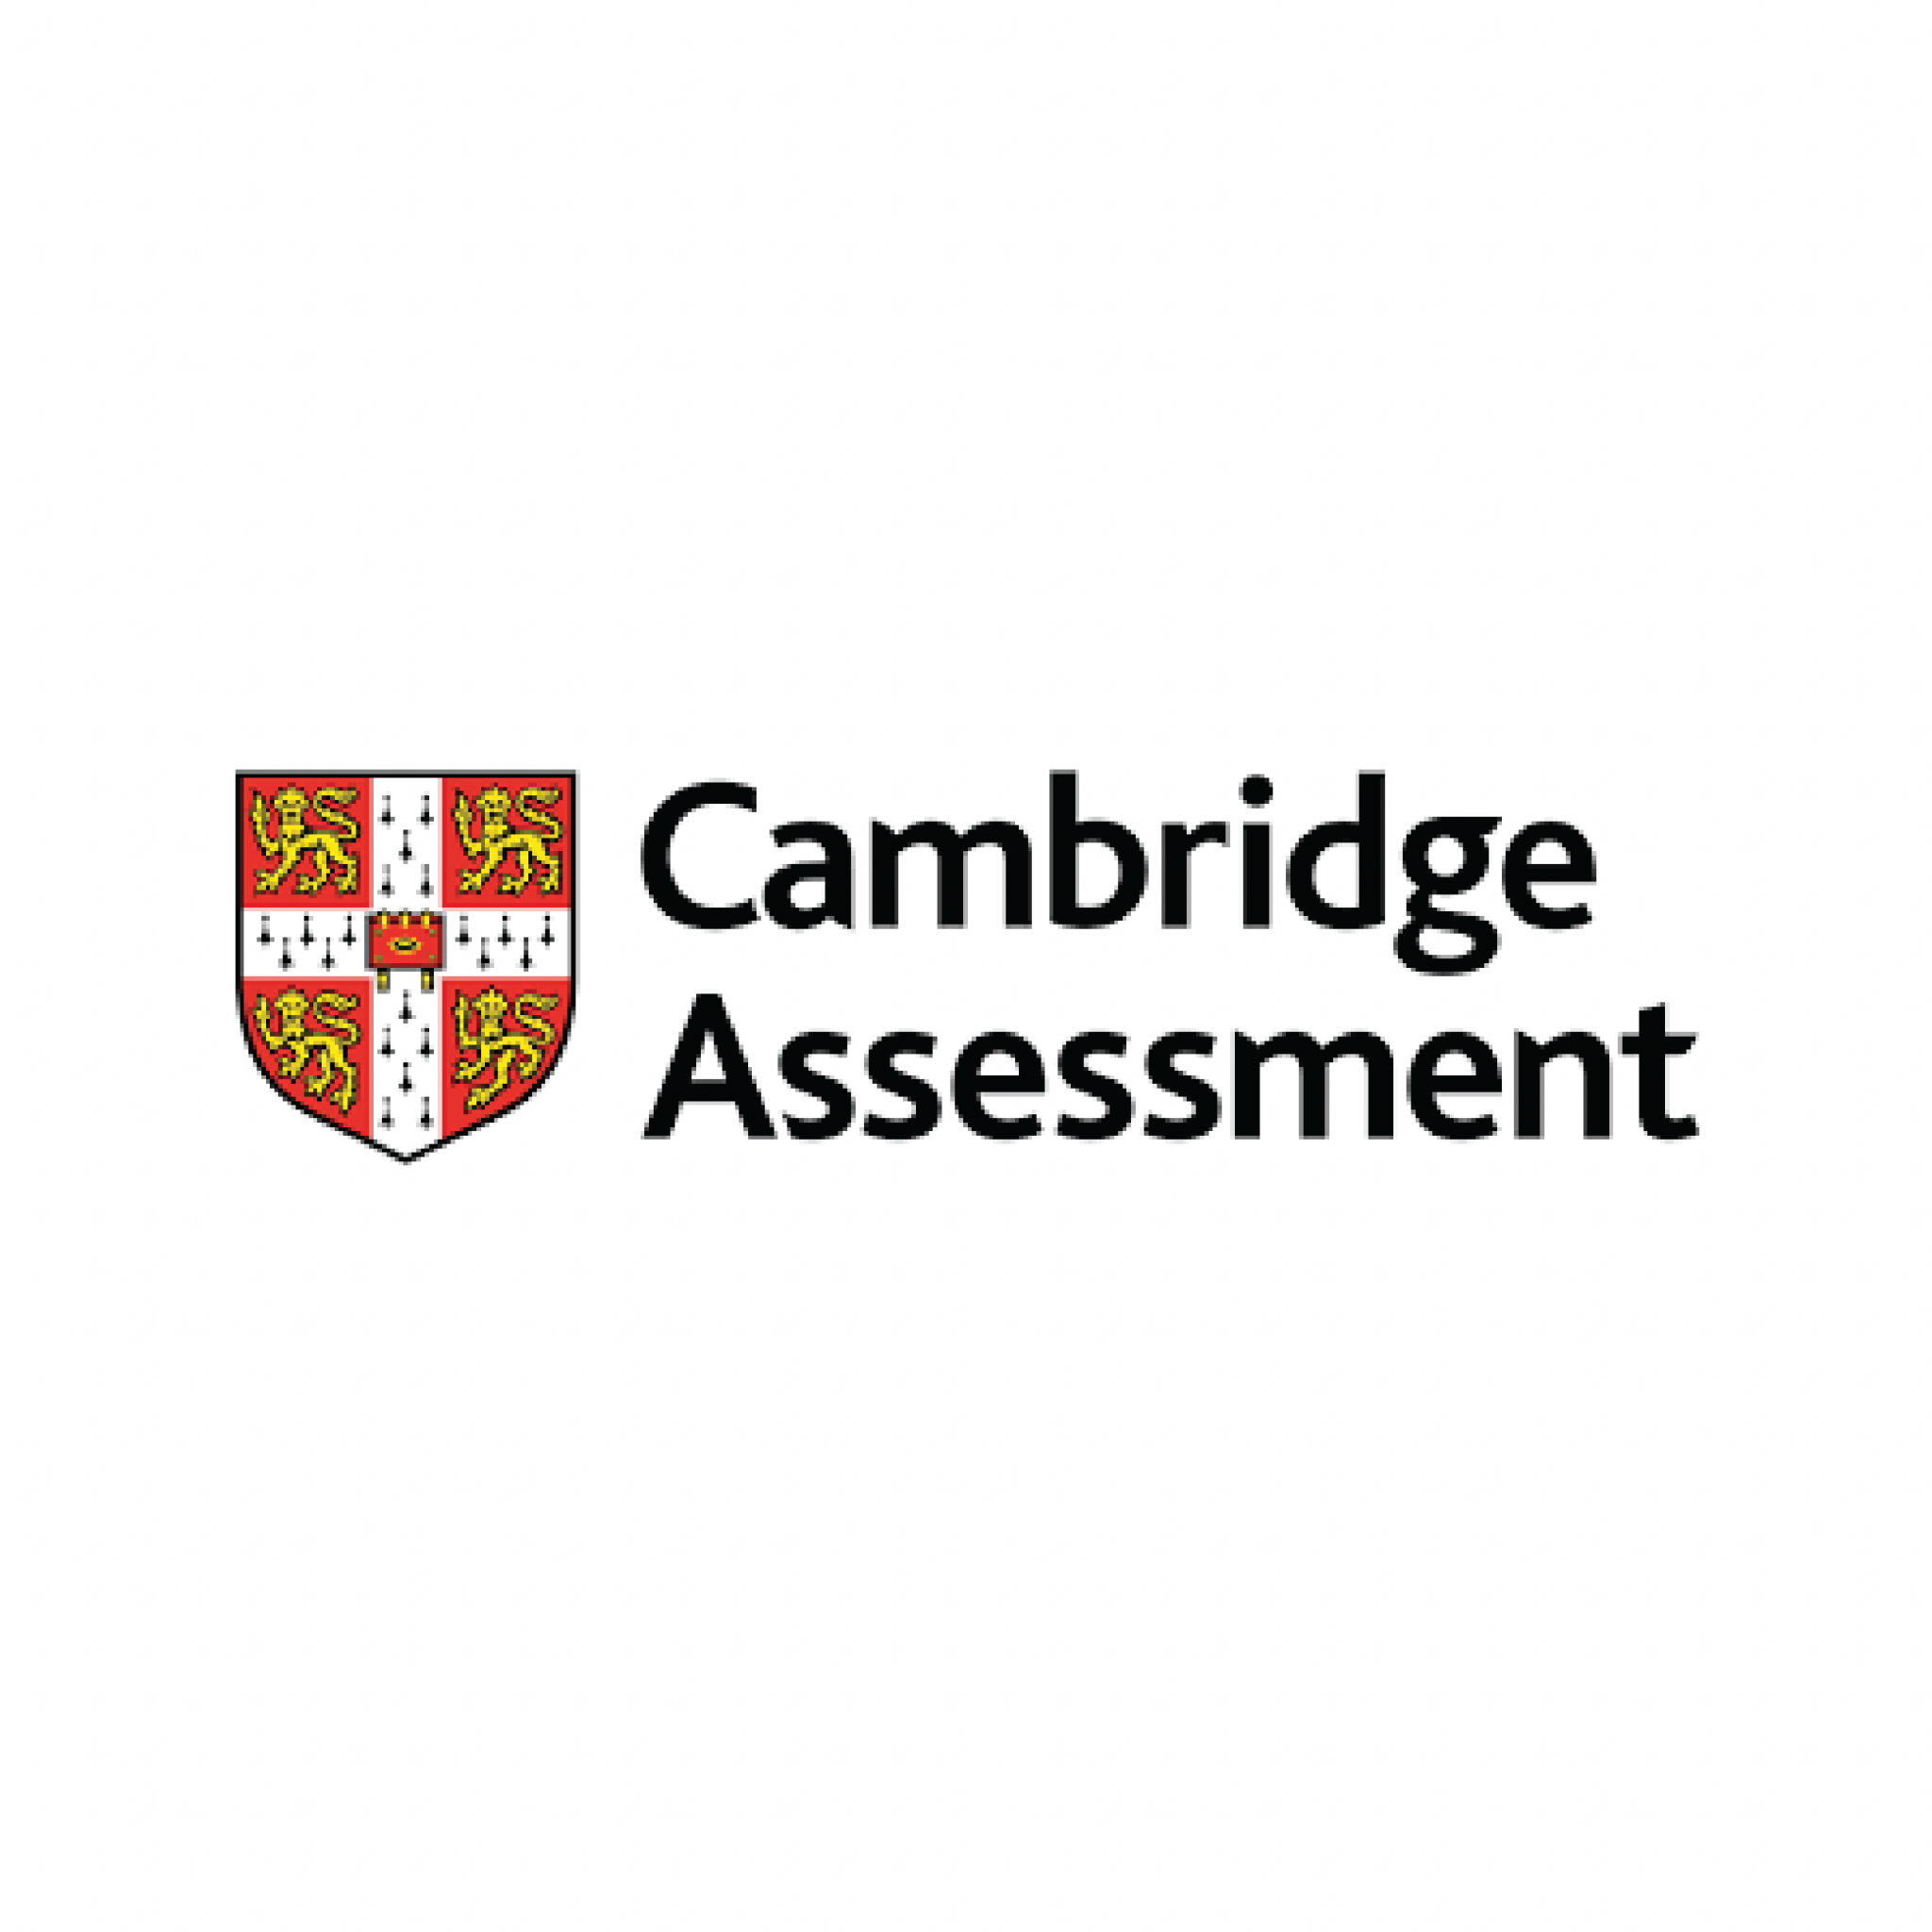 LOGO CAMBRIDGE ASSESSMENT NS ENGAGEMENTS QUALITÉS-01